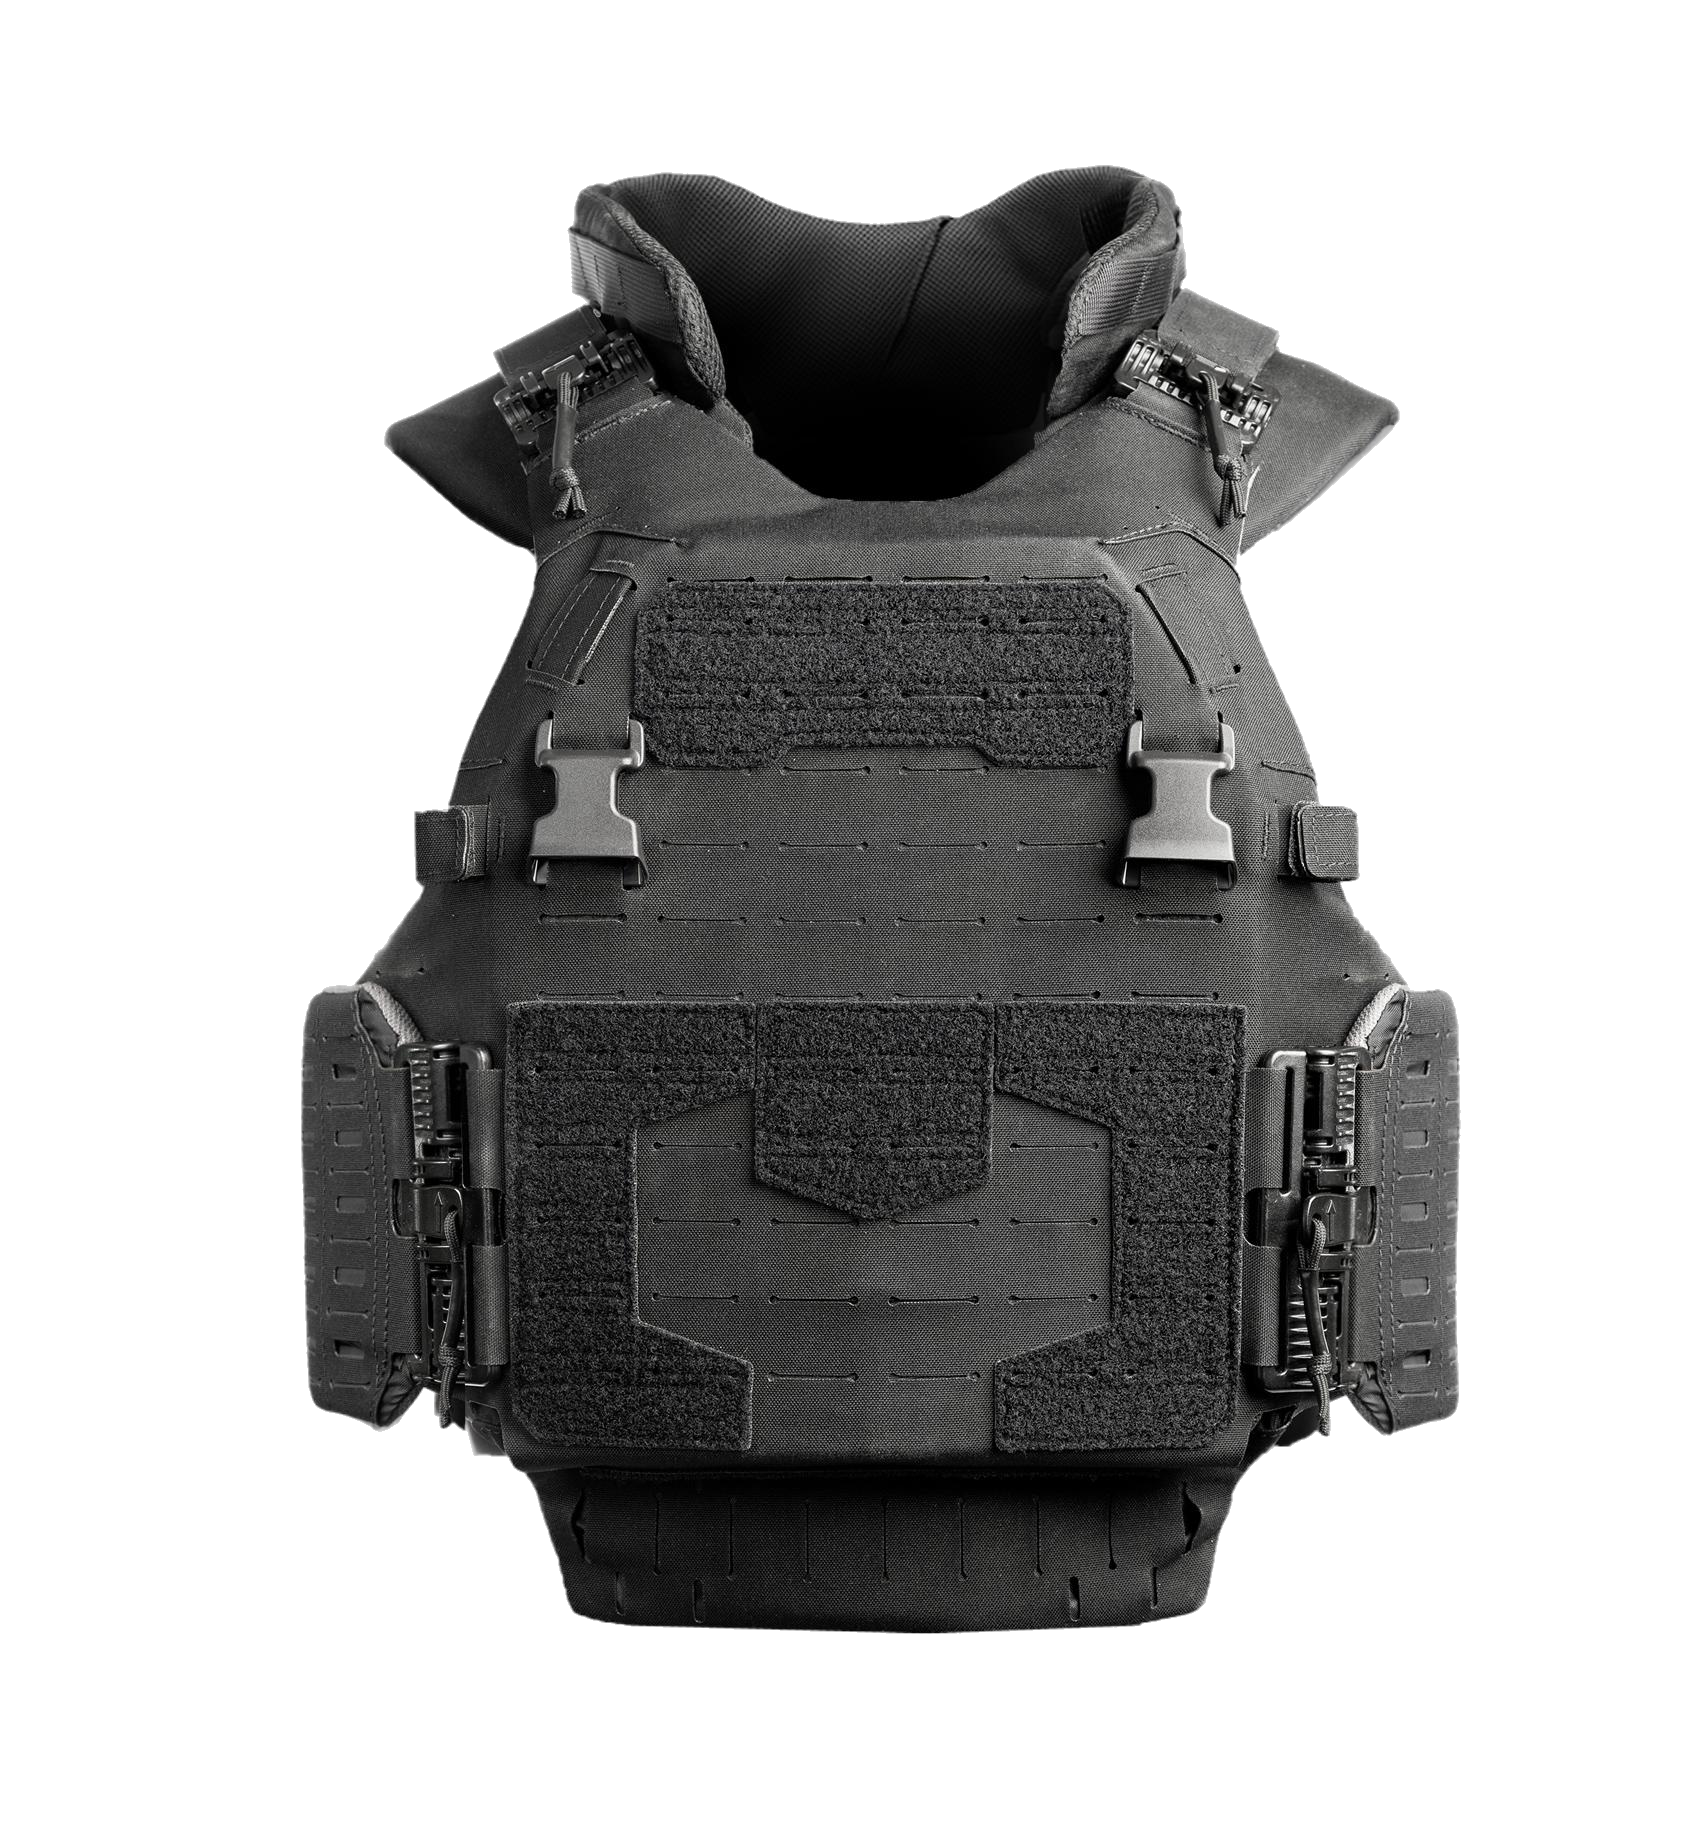 Patrol Bulletproof Vest Level IIIA Standard - Ace Link Armor